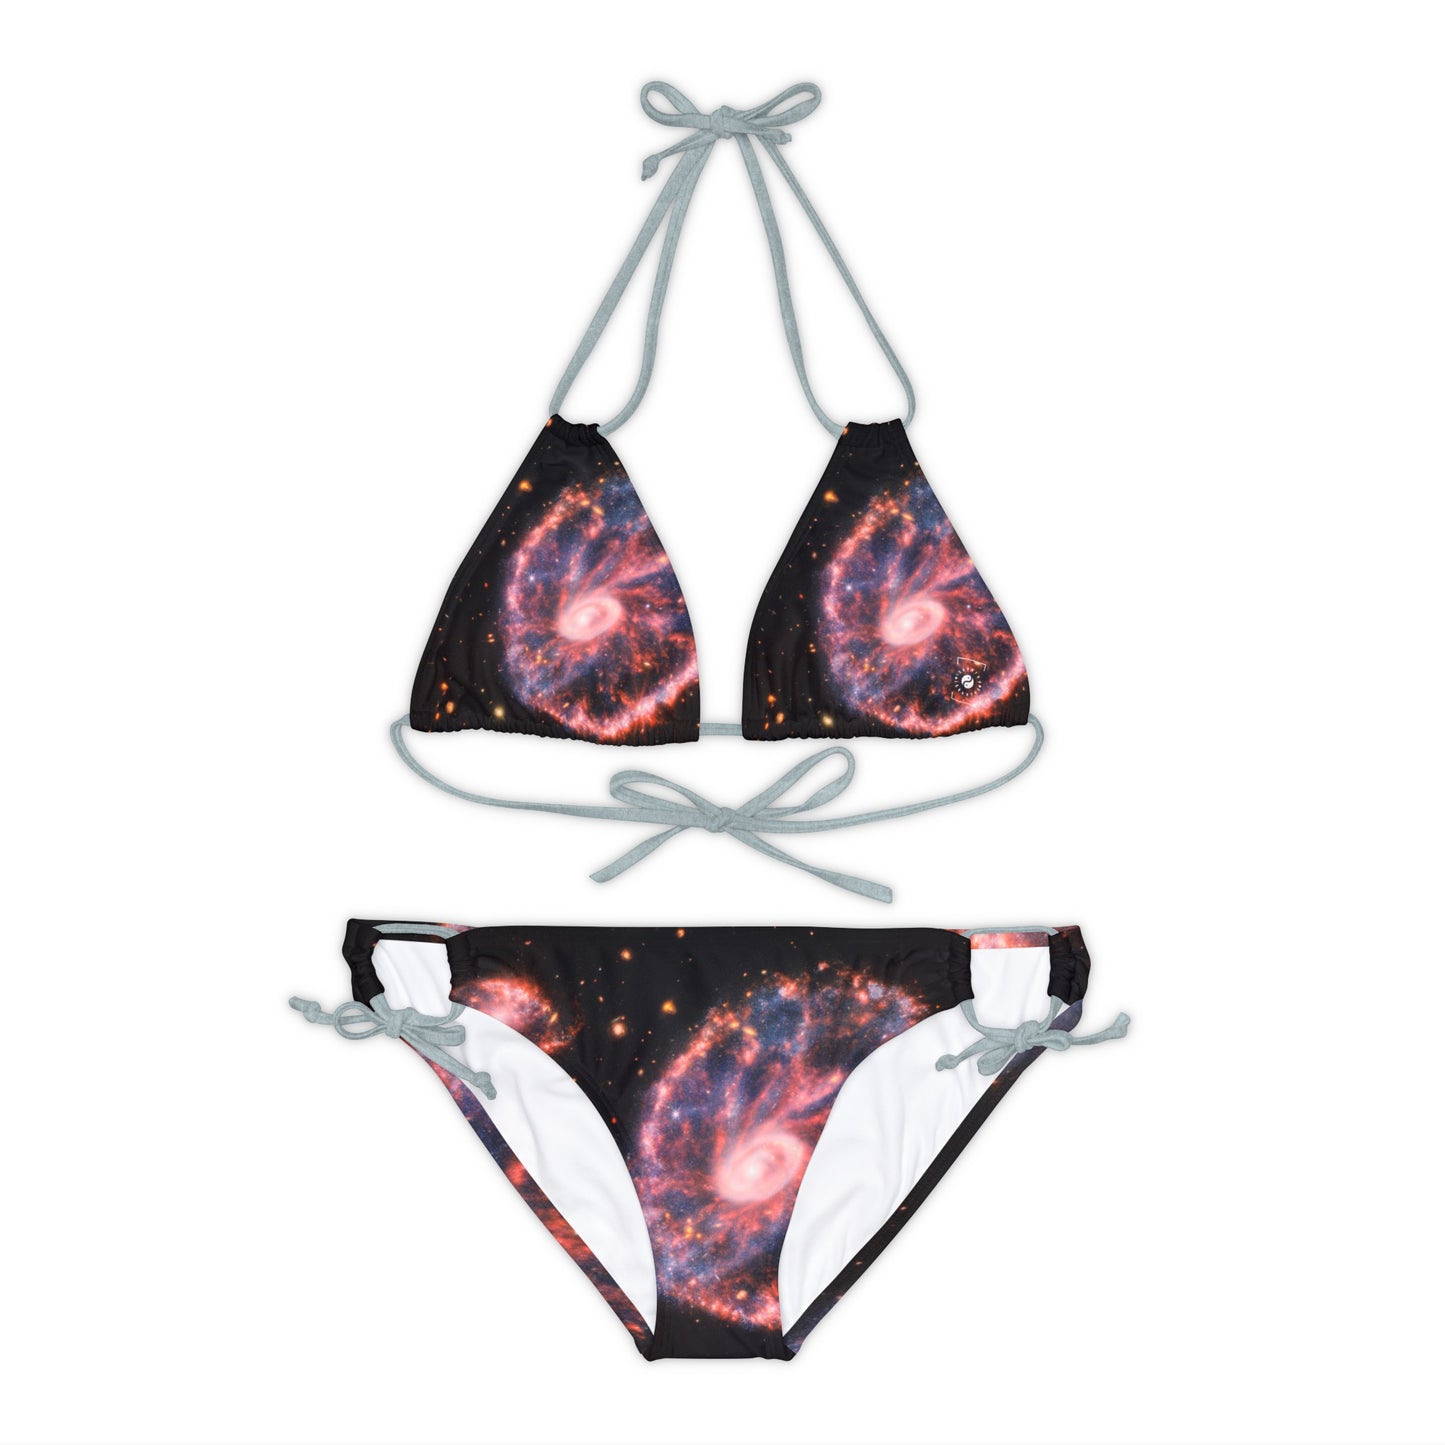 Cartwheel Galaxy (image composite NIRCam et MIRI) - Ensemble bikini à lacets